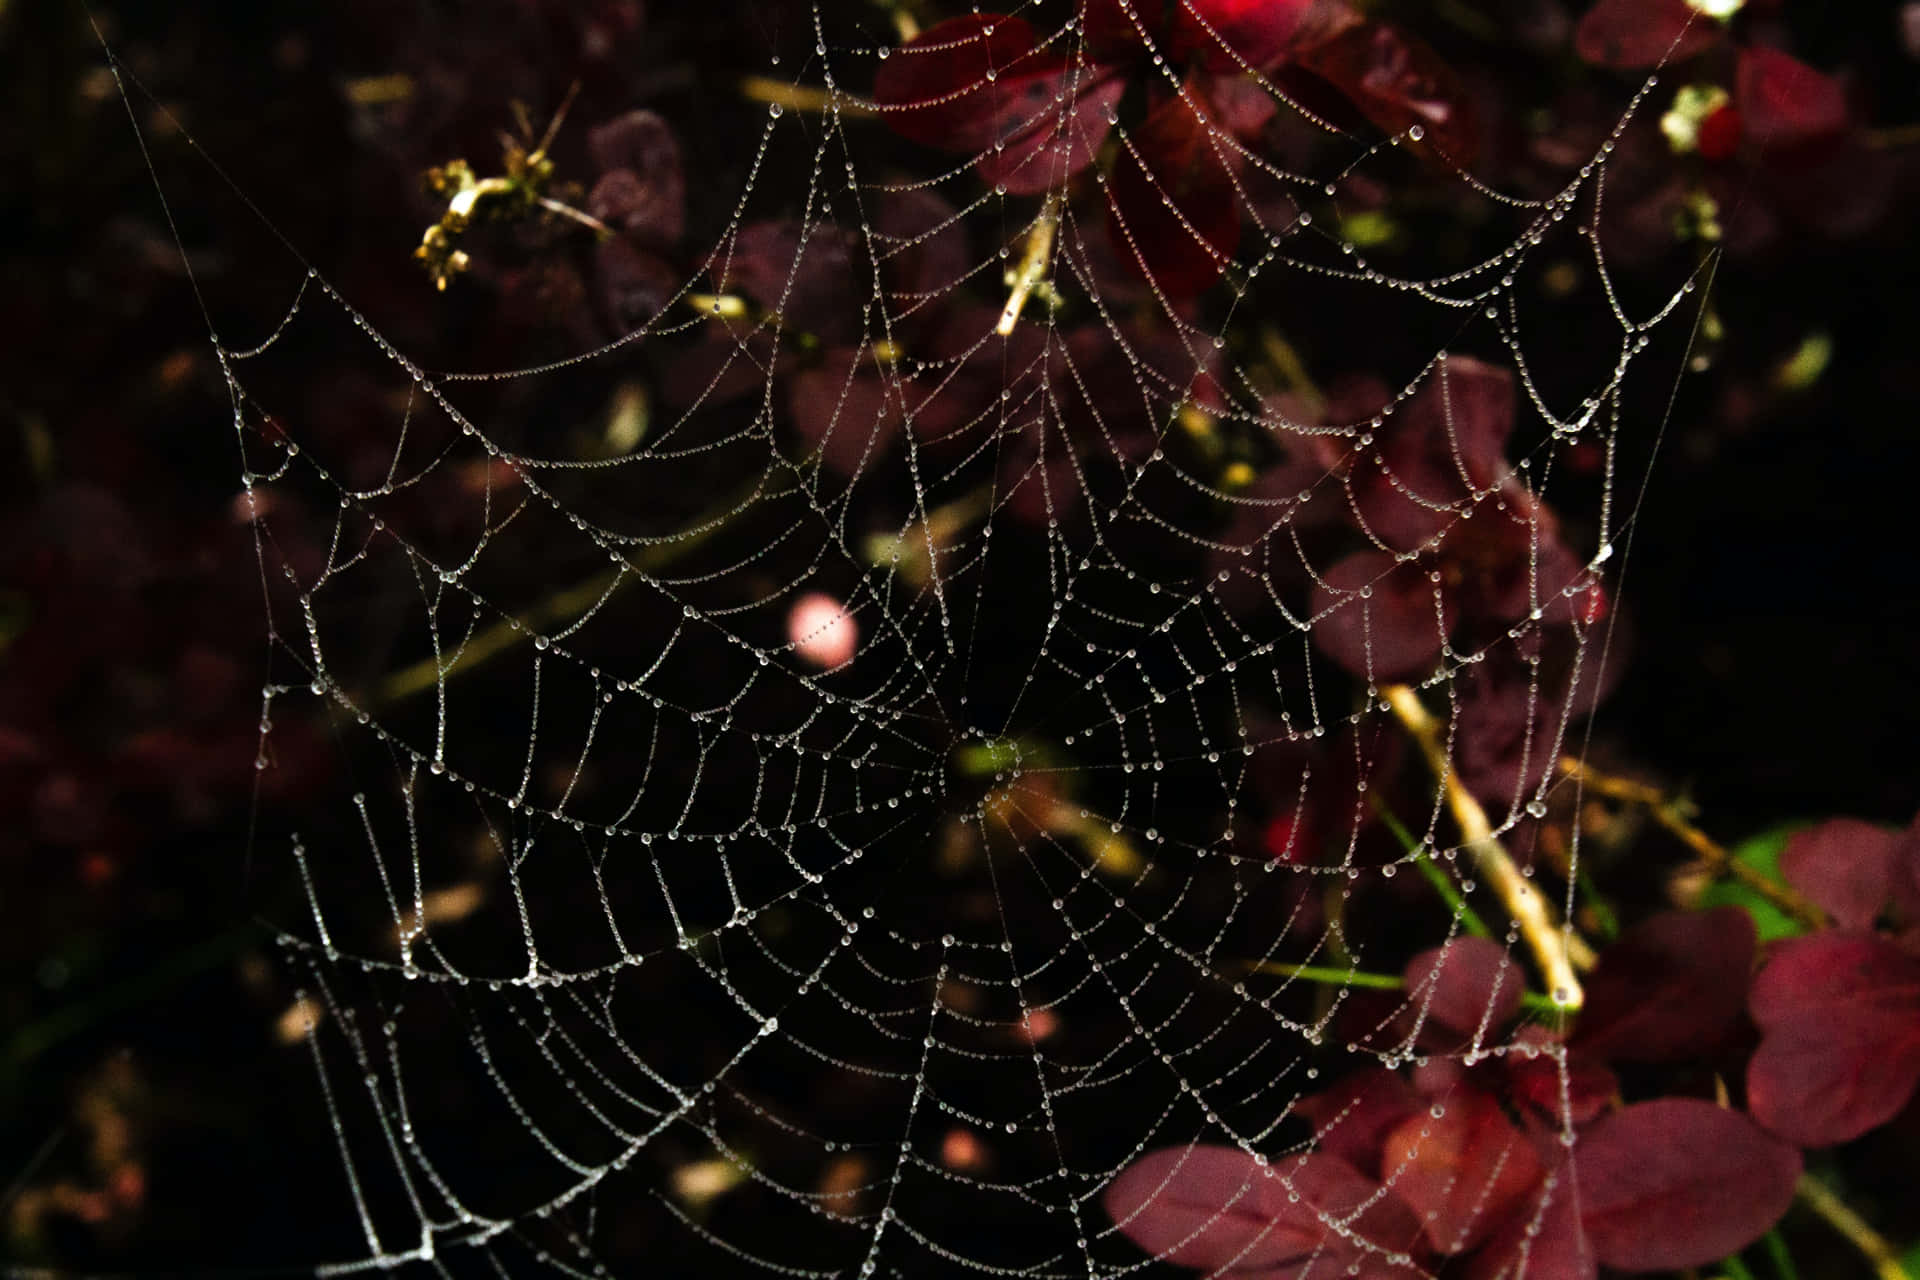 Intricate Spider Web [wallpaper] Wallpaper